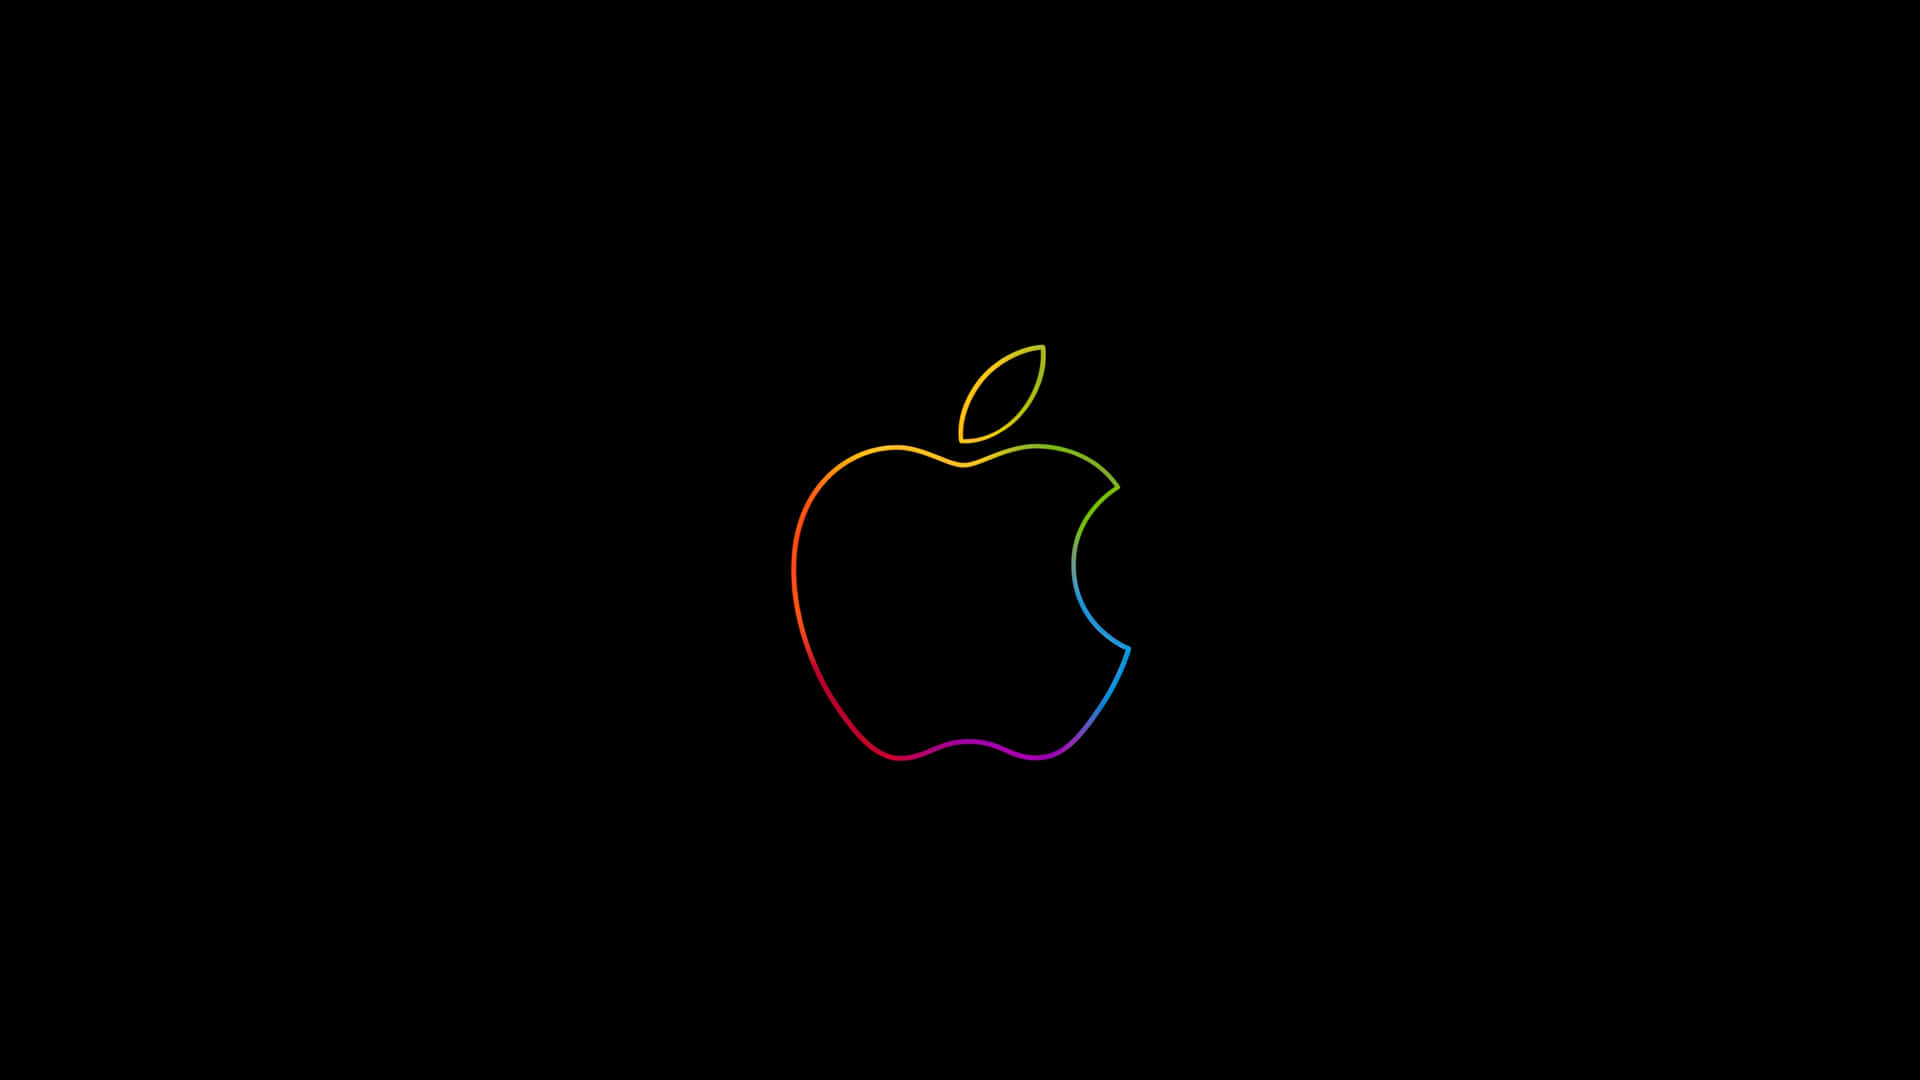 Caption: Sleek Apple Logo Wallpaper